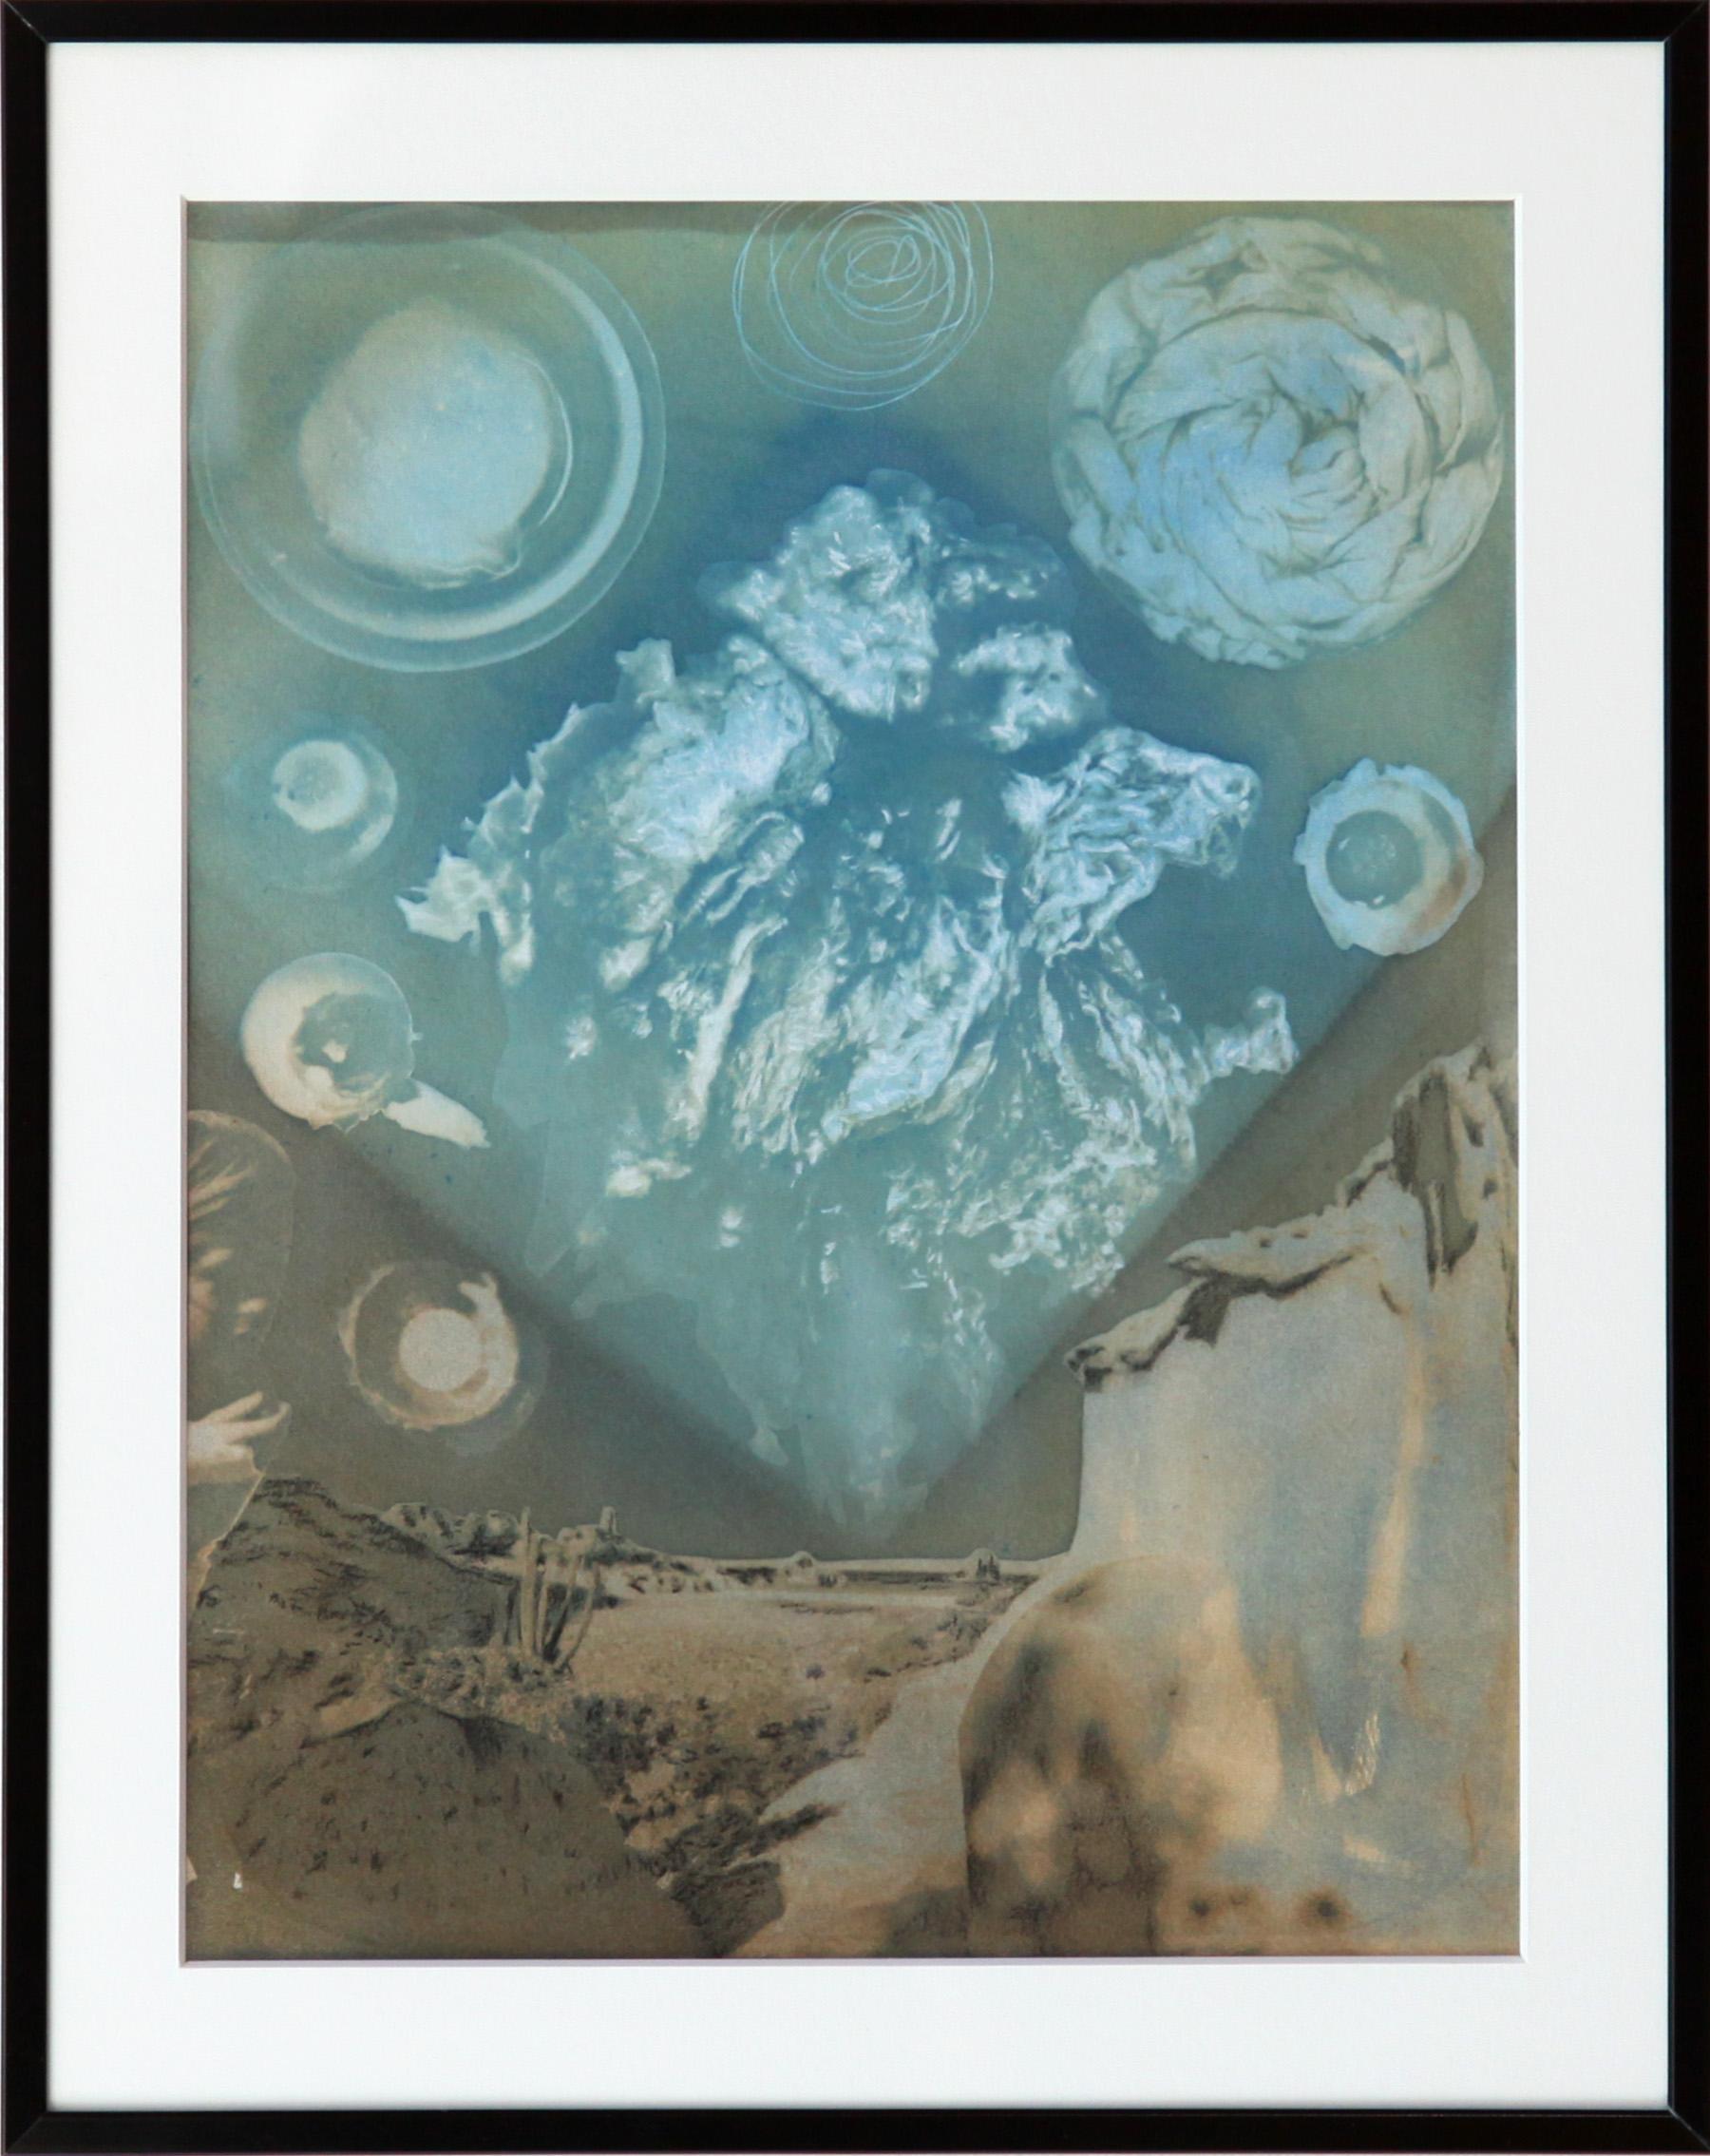 Annalise Neil Abstract Photograph - A Conceptually Surreal Alternative Photographic Print, "Thermopolis/Isla Ispiri"